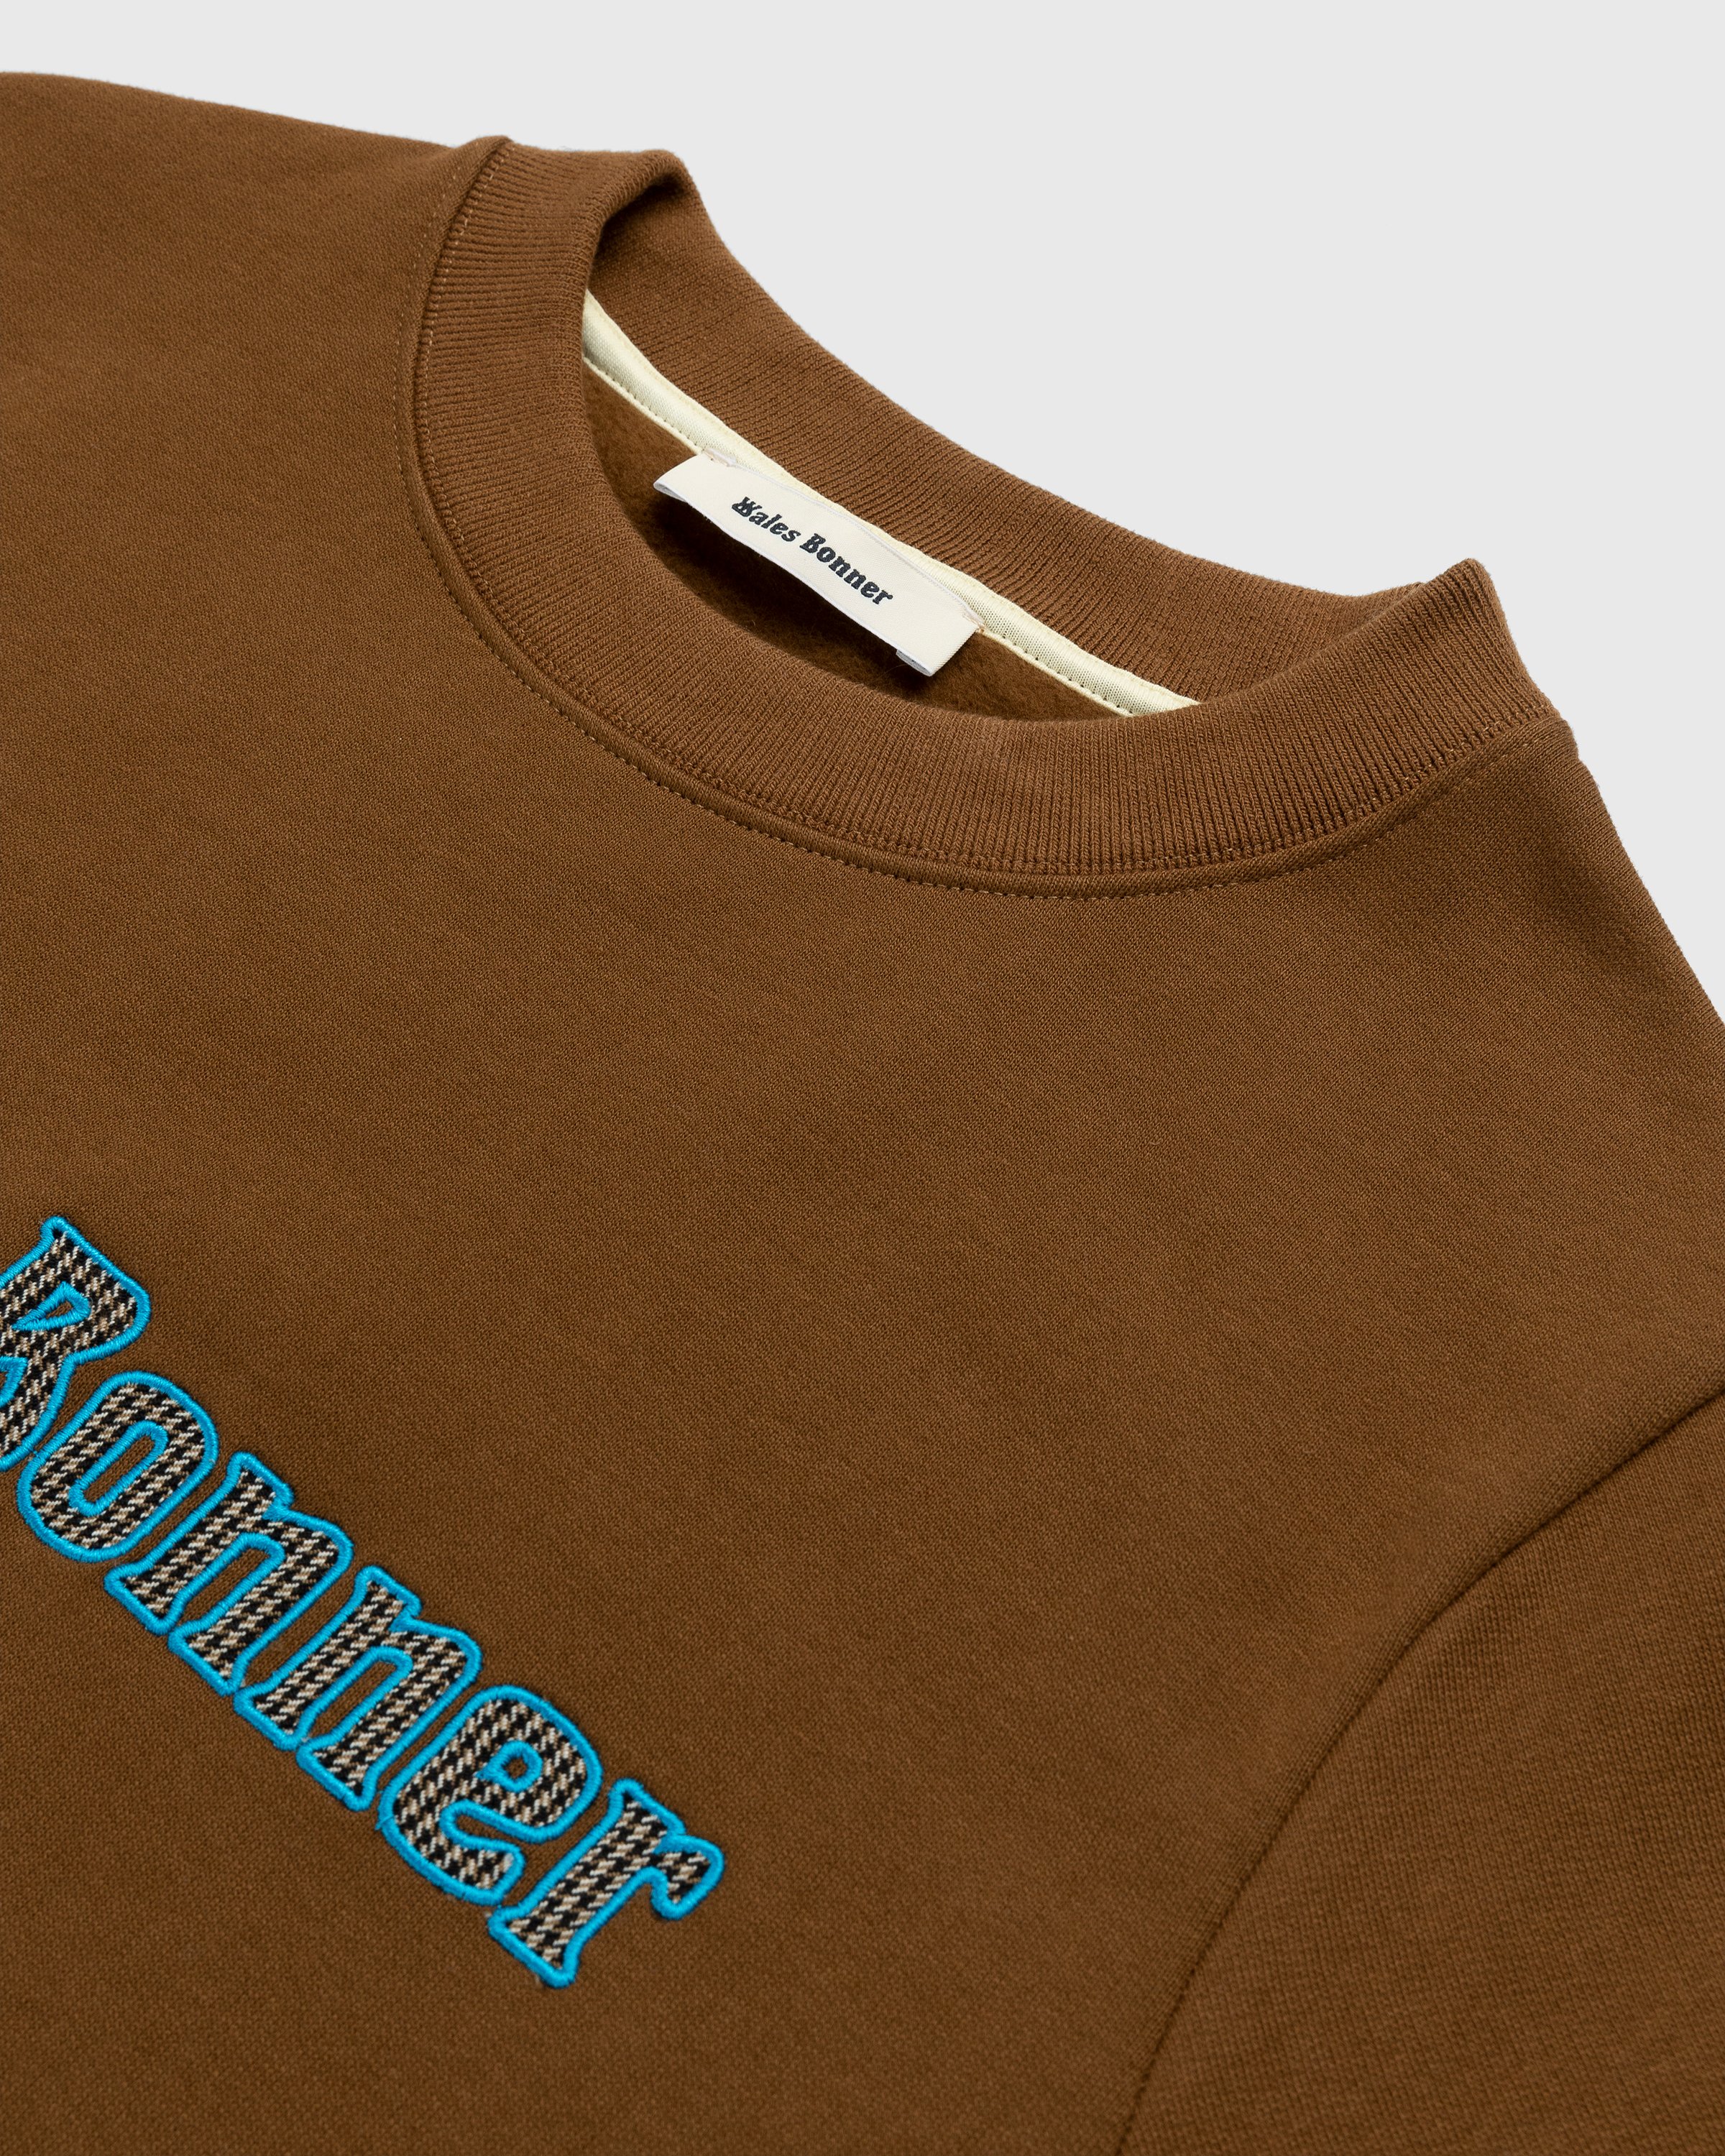 Wales Bonner - Original Sweatshirt Brown - Clothing - Brown - Image 4